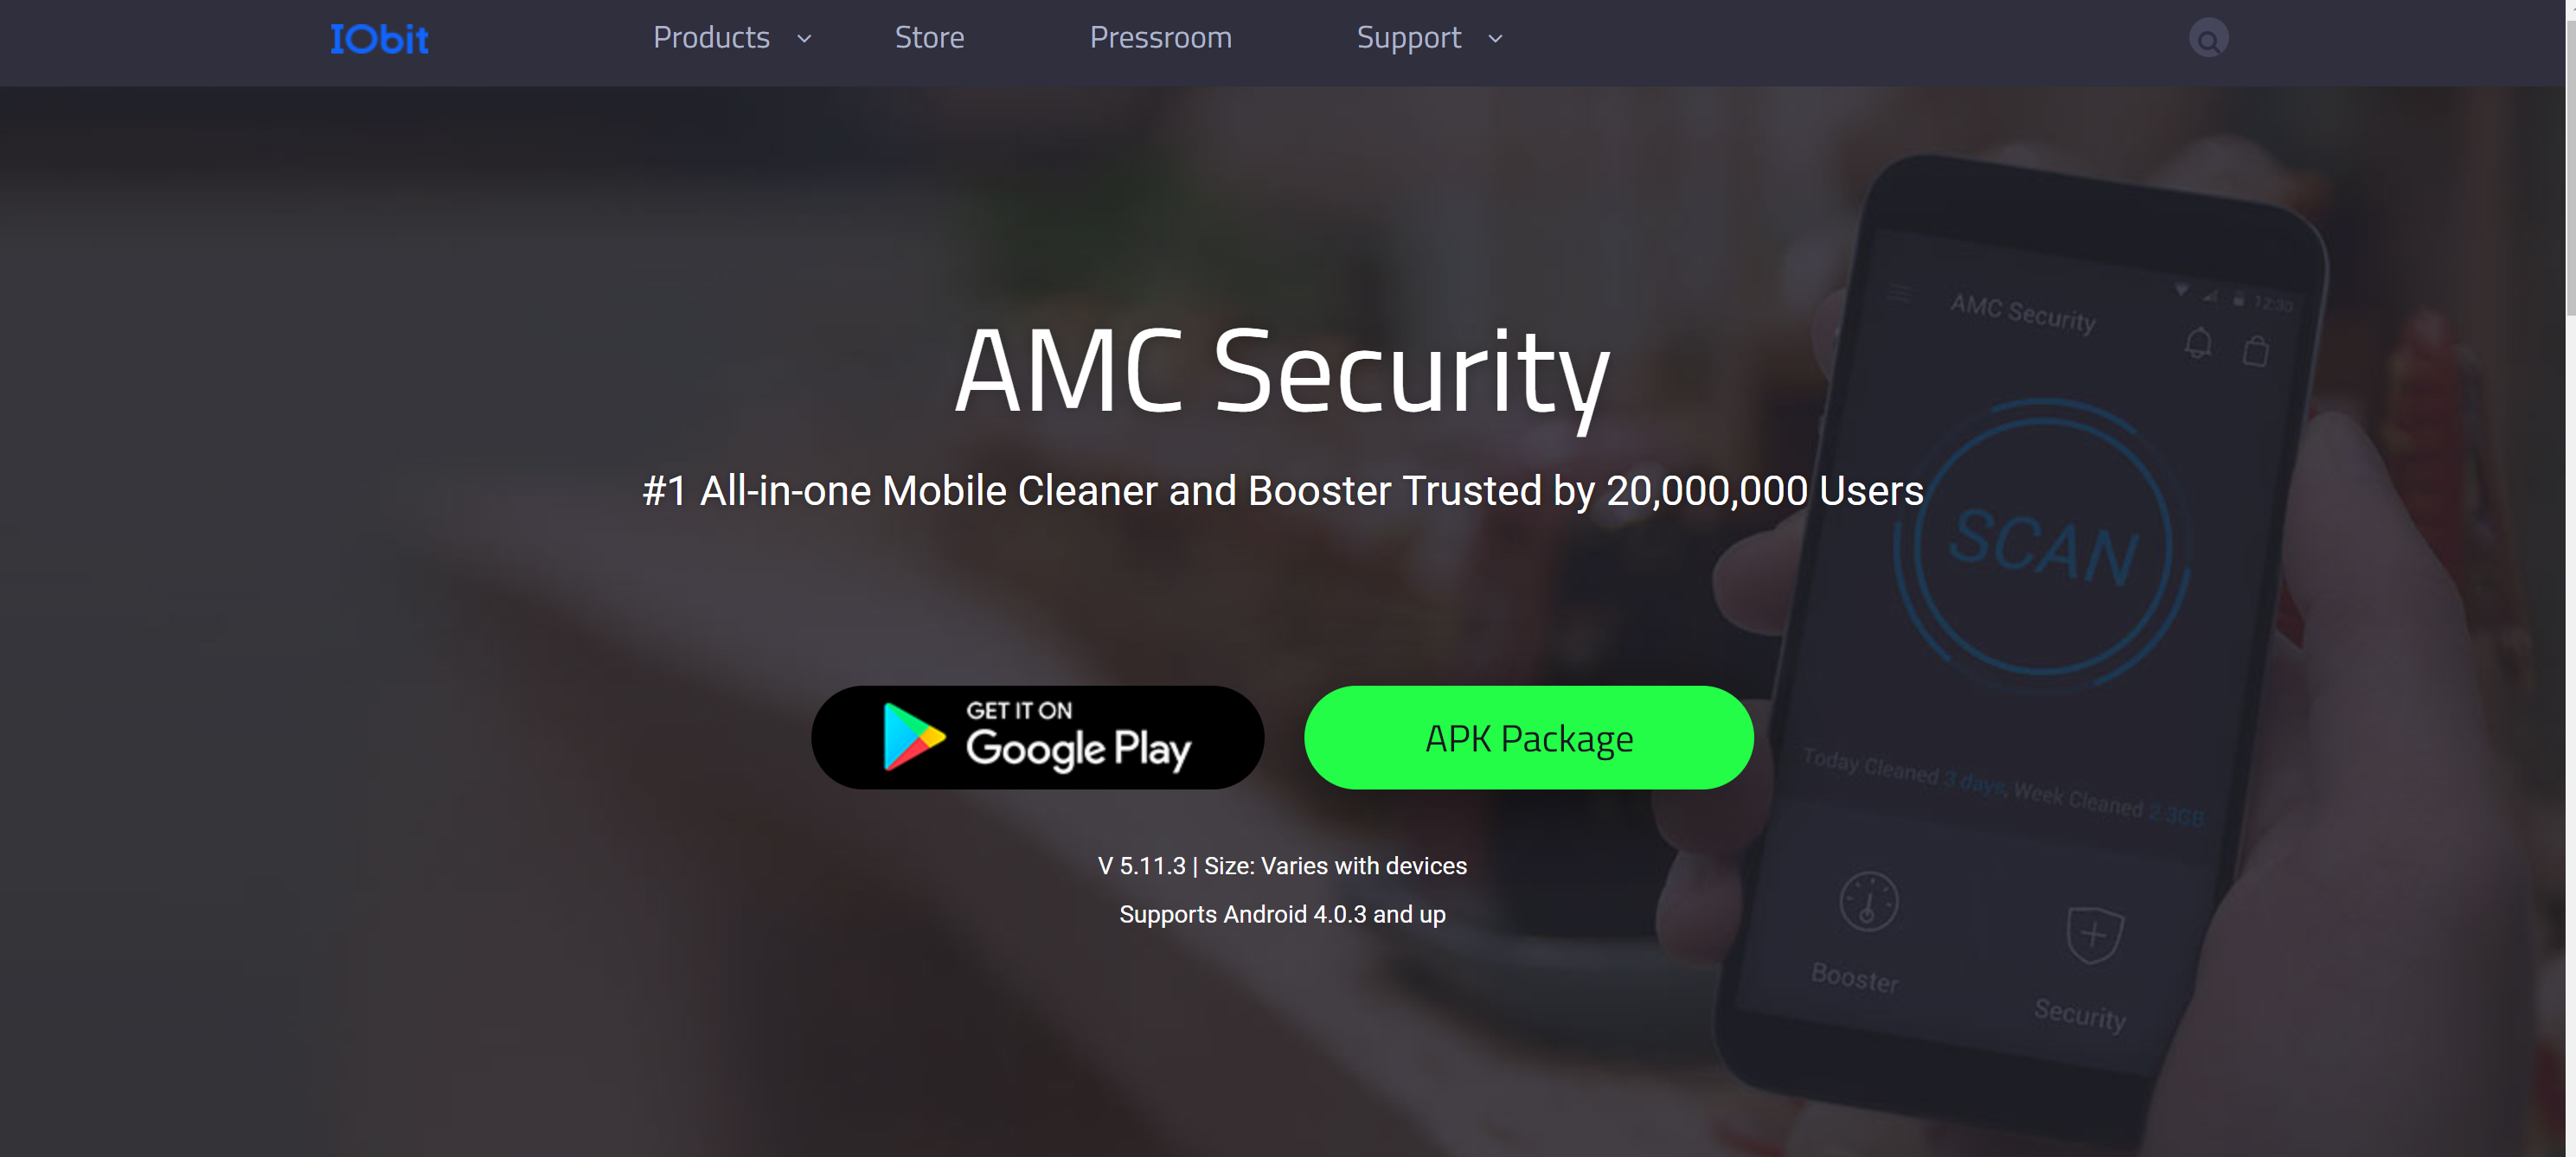 amc security 5.9.4 pro serial